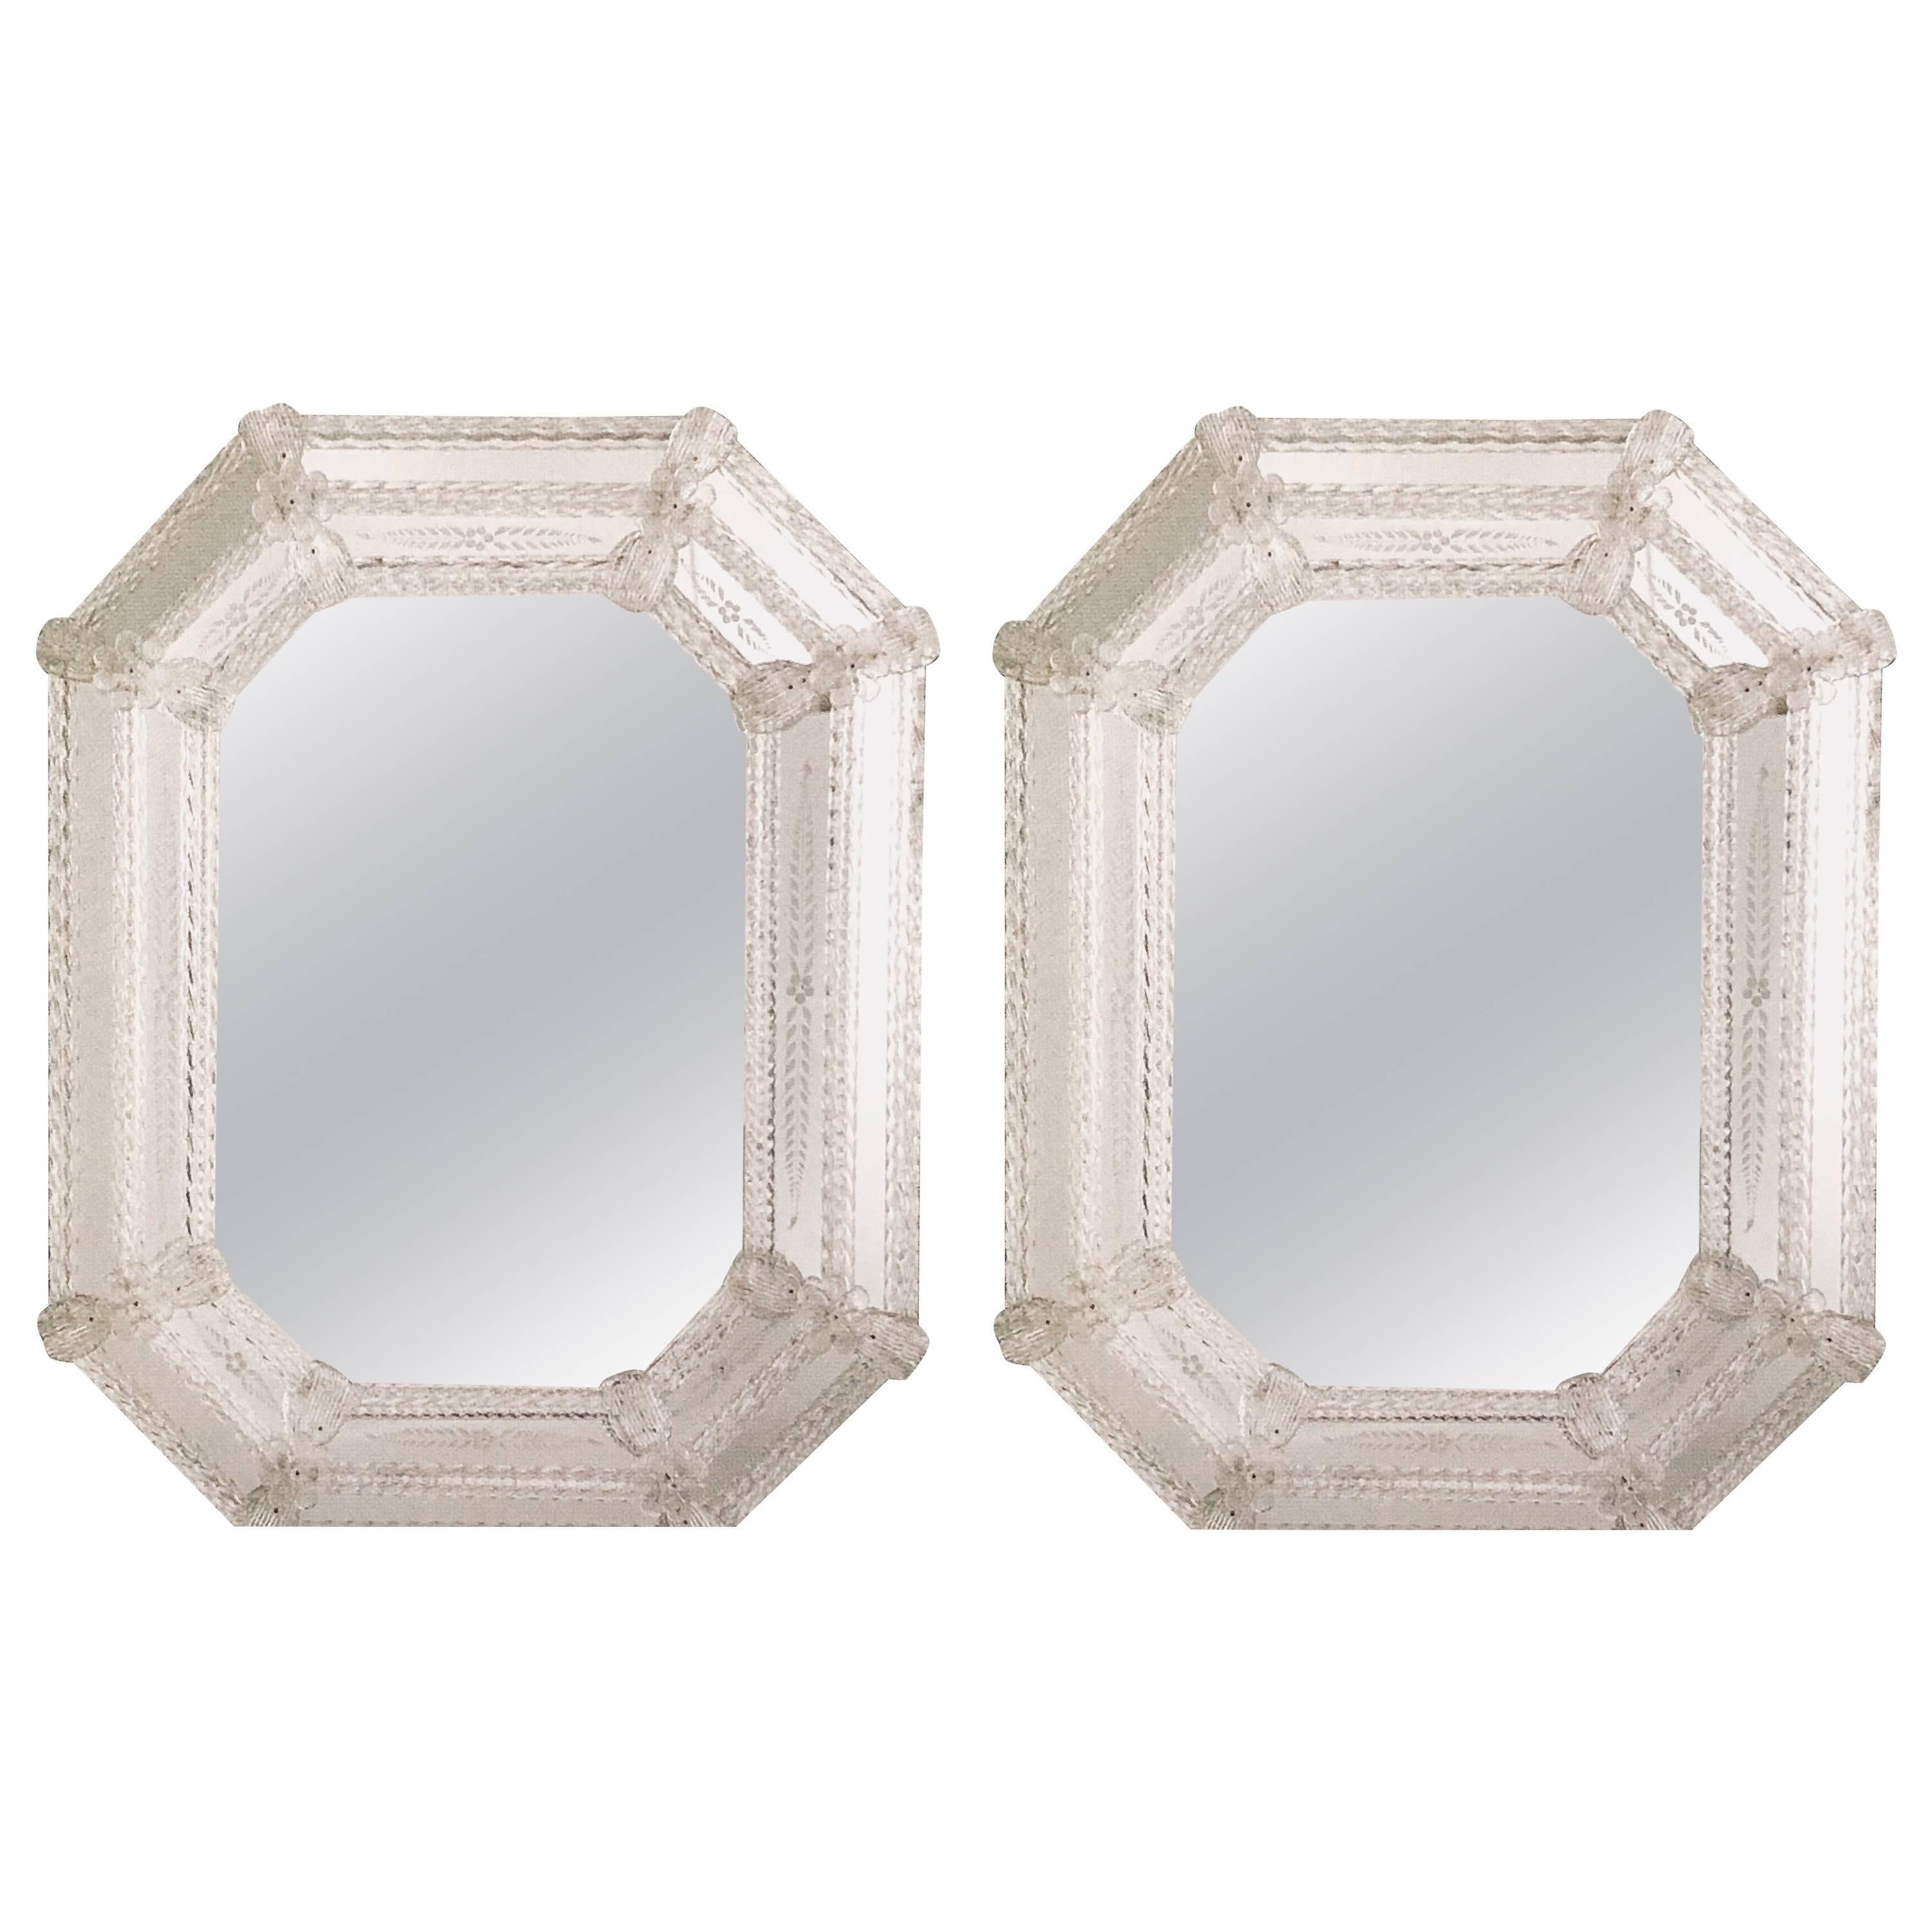 Two Italian Modern Neoclassical Etched Venetian/Murano Glass Octagonal Mirrors